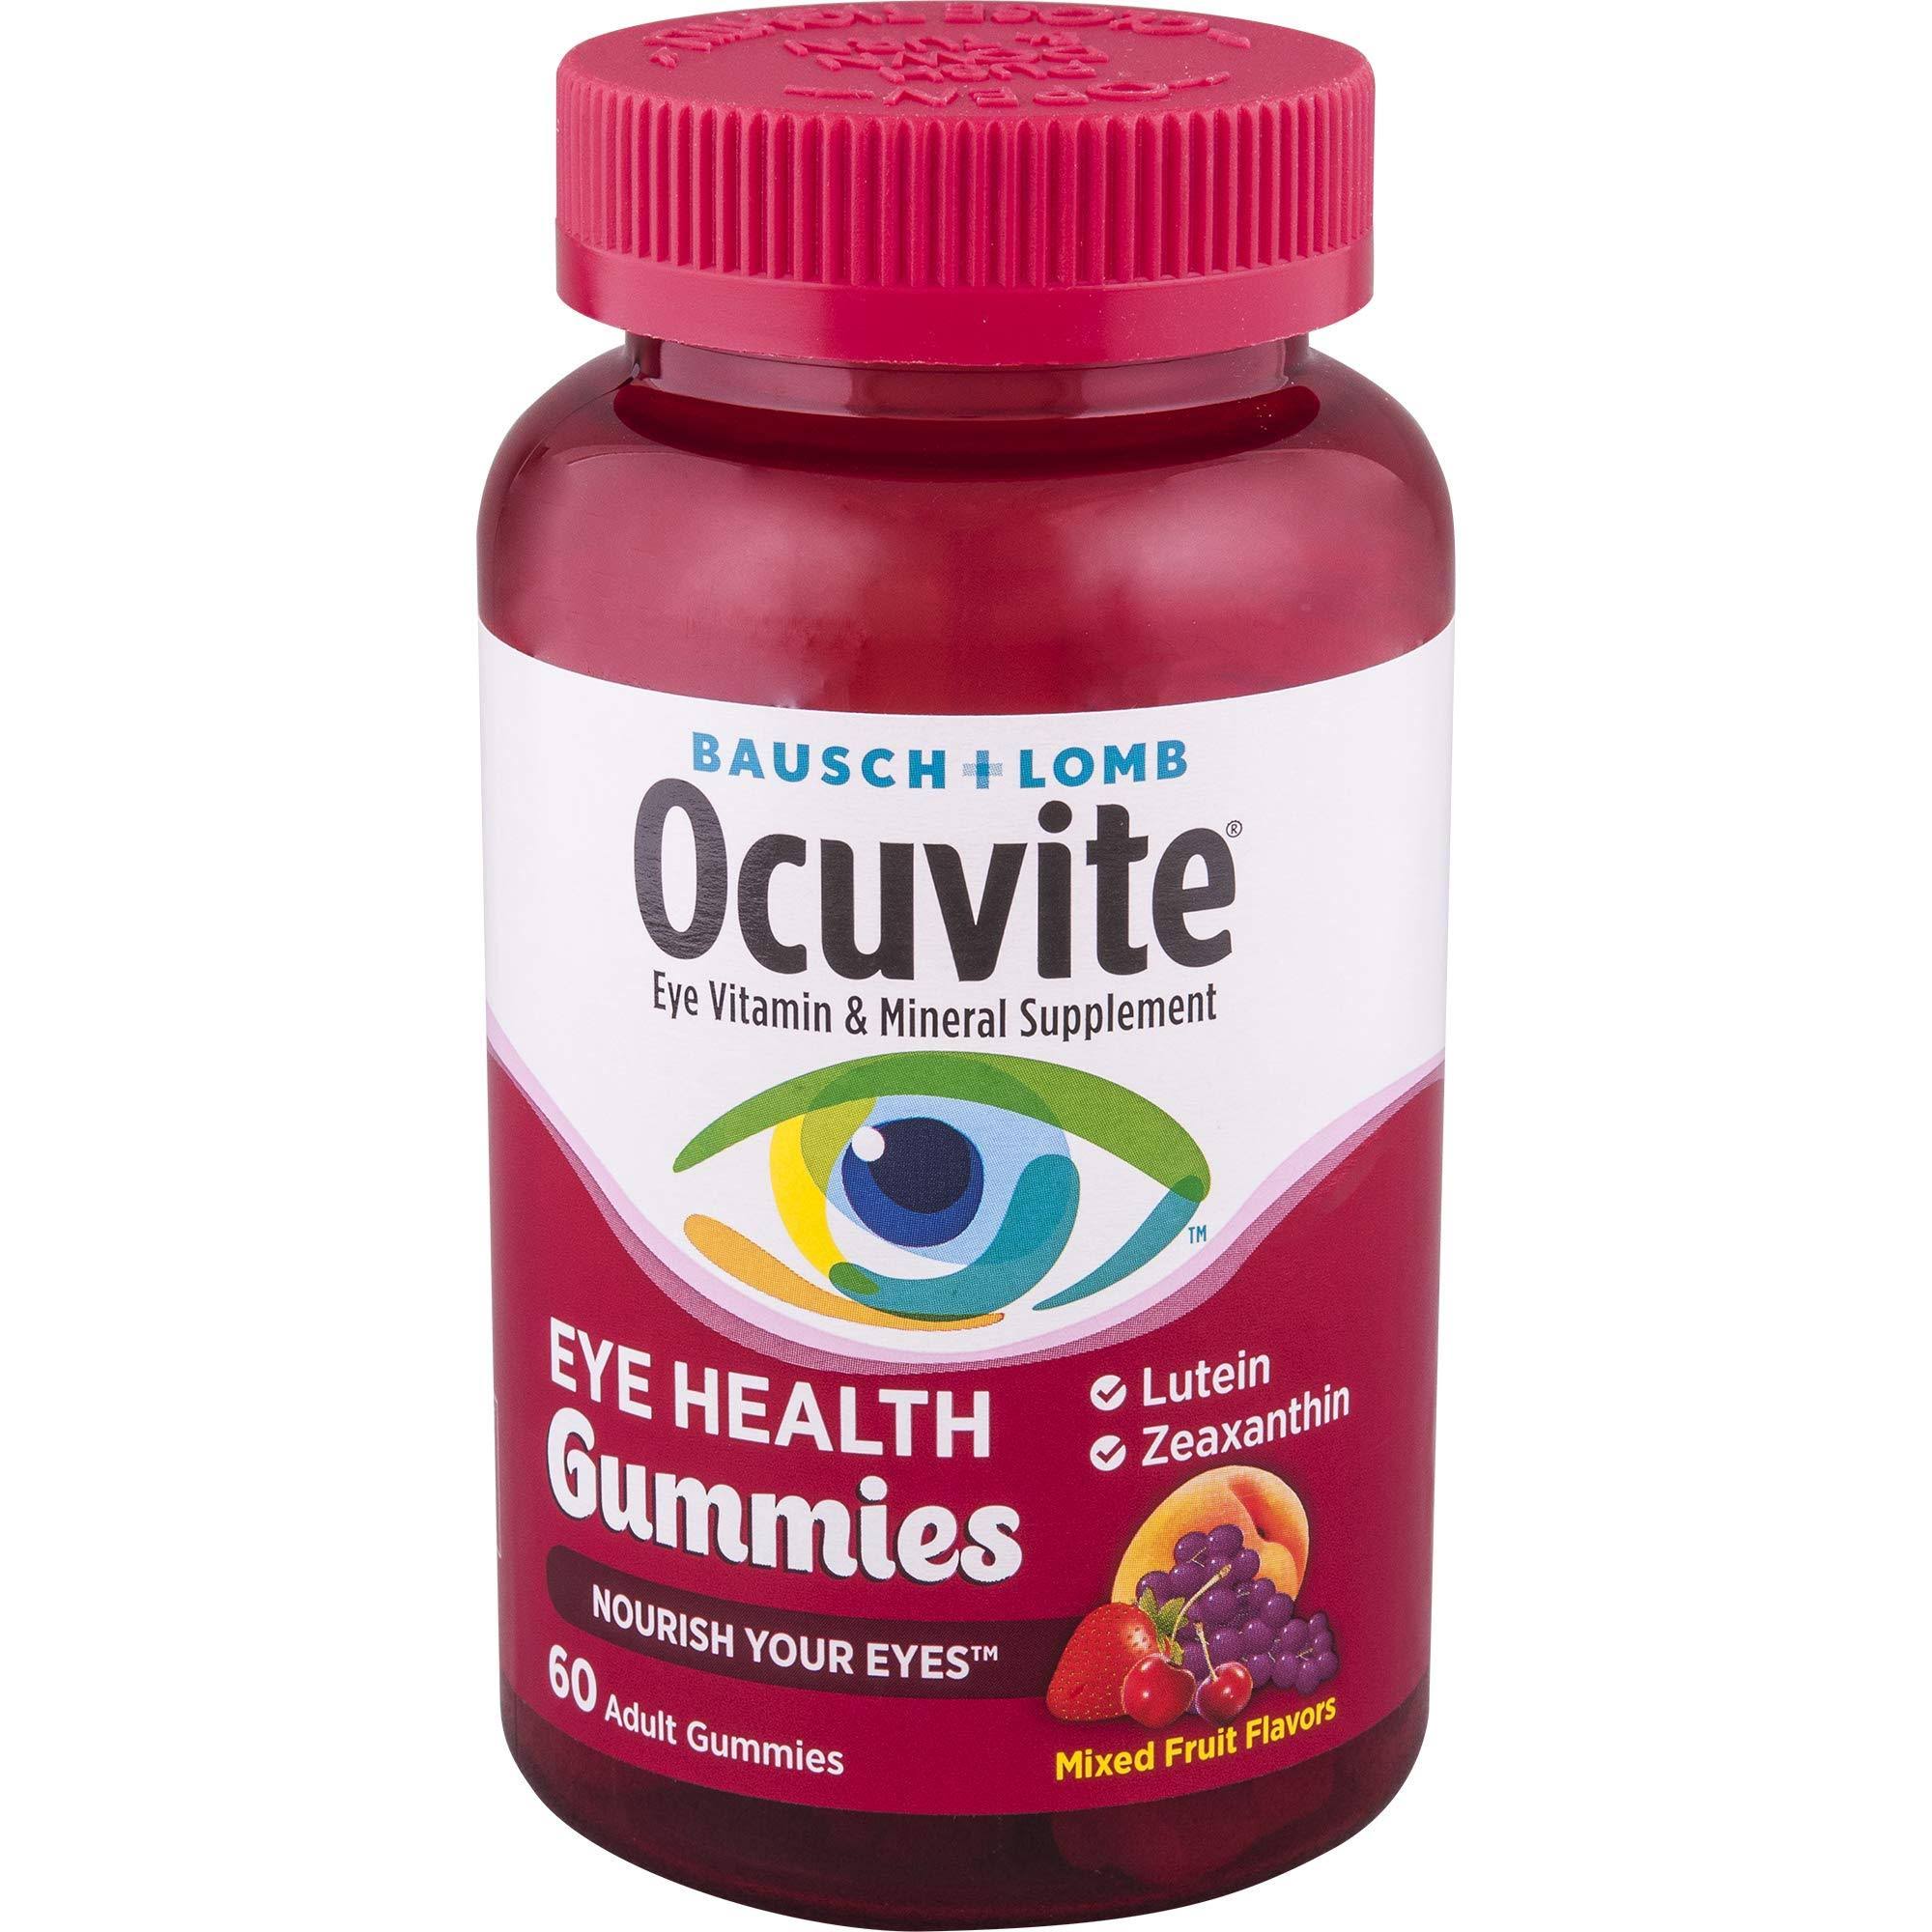 Bausch Lomb Ocuvite Eye Health Gummies - Mixed Fruit Flavors, 60ct